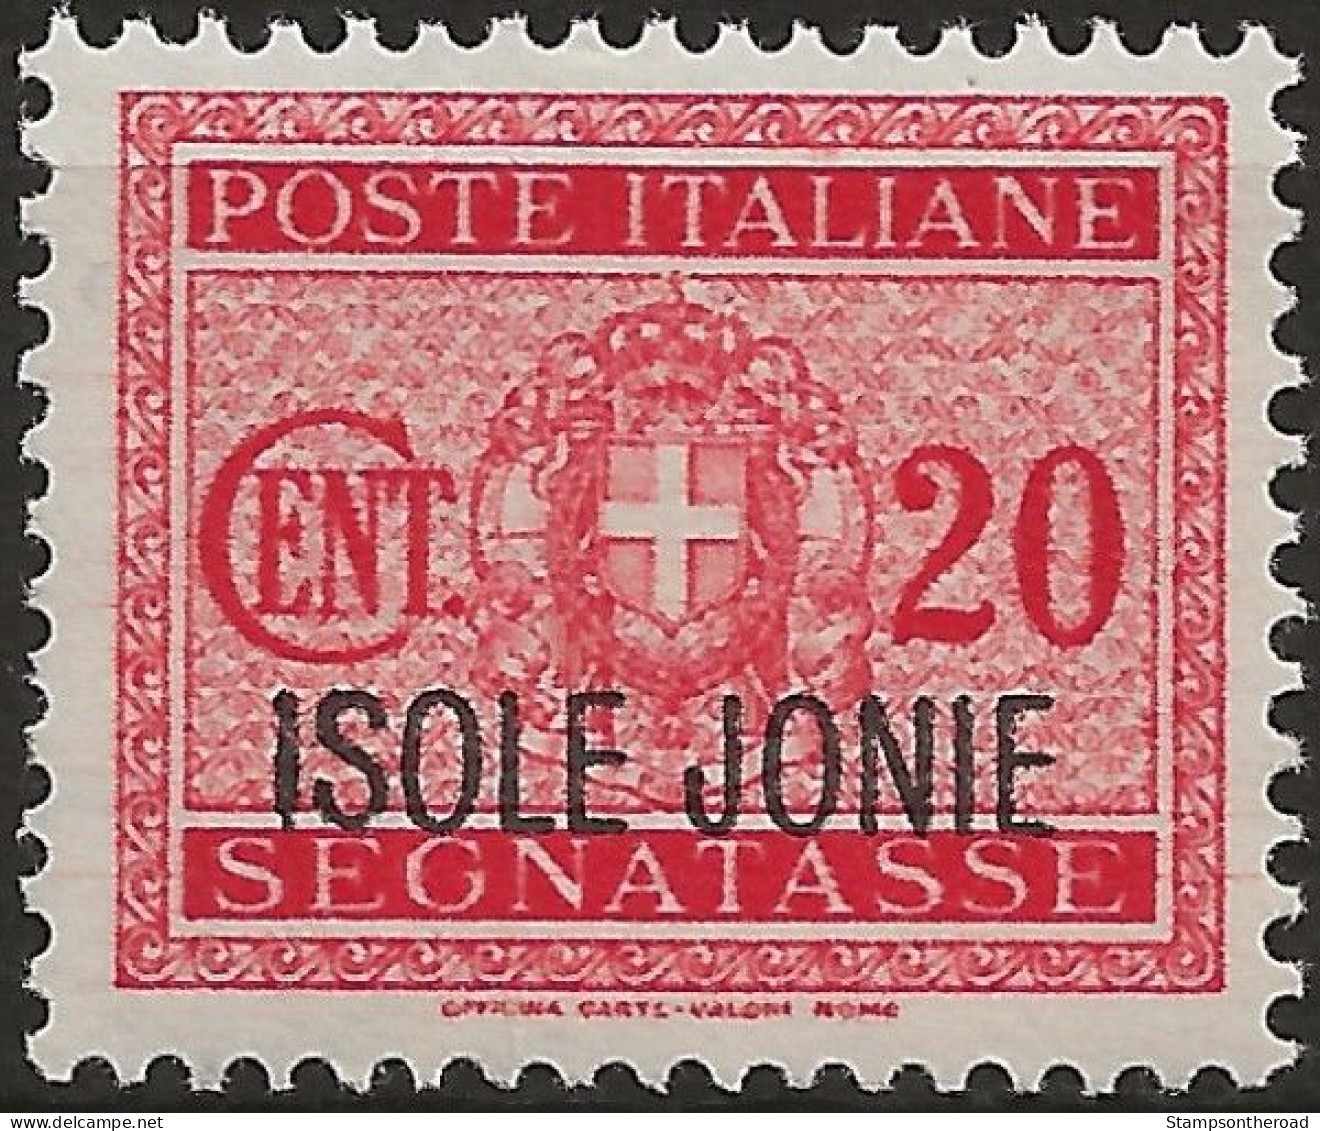 OIJOSx2N - 1941 Occup. Milit. Ital. ISOLE JONIE, Sass. Nr. 2, Segnatasse Nuovo Senza Linguella **/ - Ionische Inseln